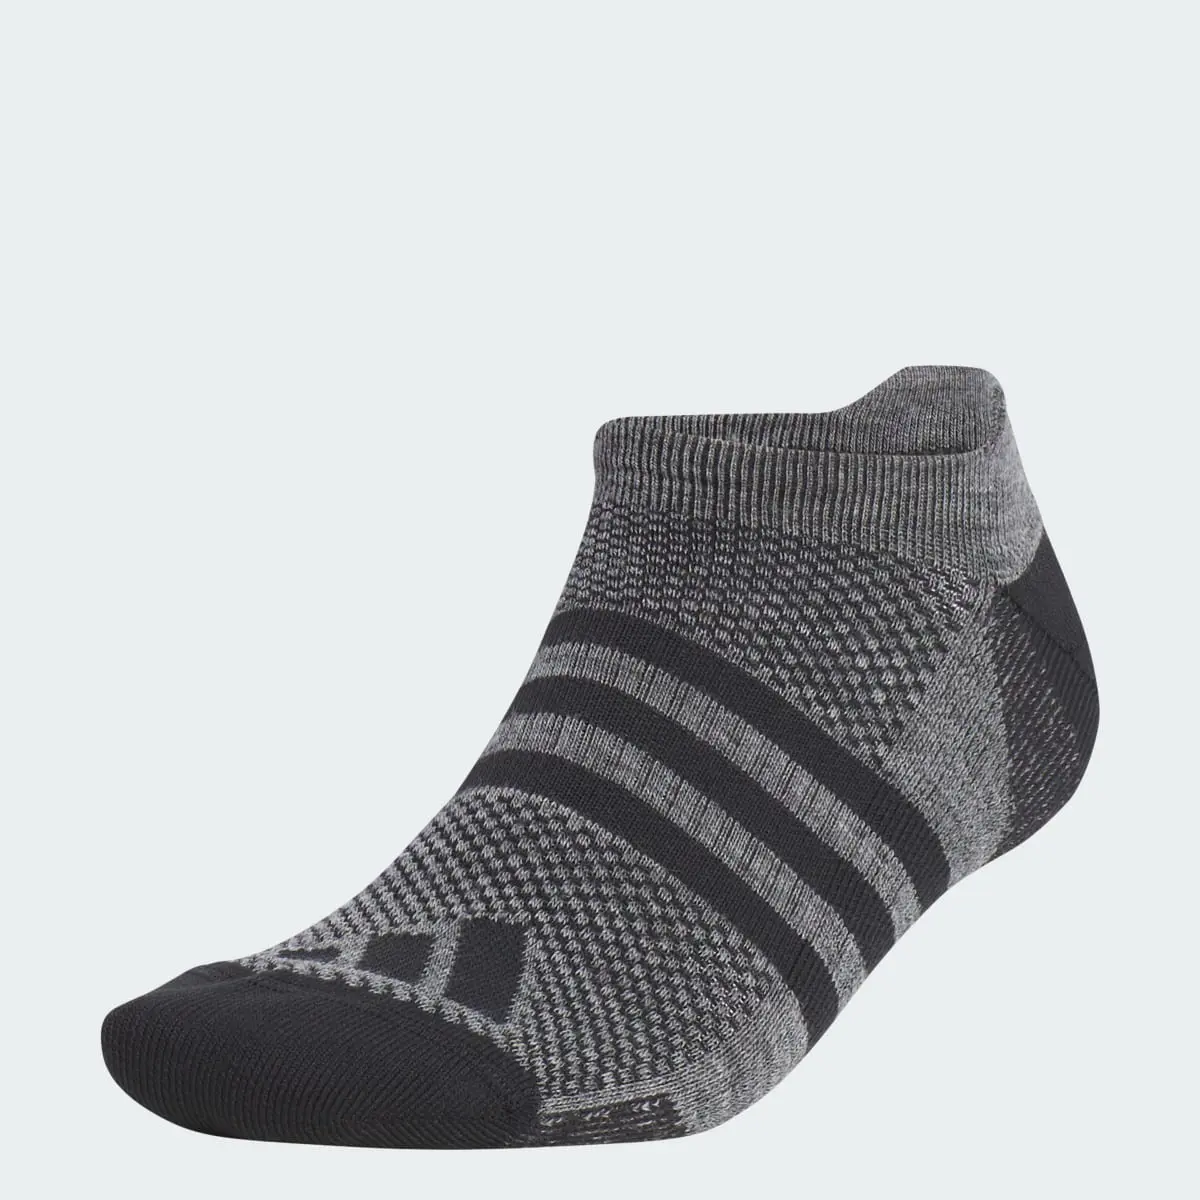 Adidas Wool Low Ankle Golf Socks. 1